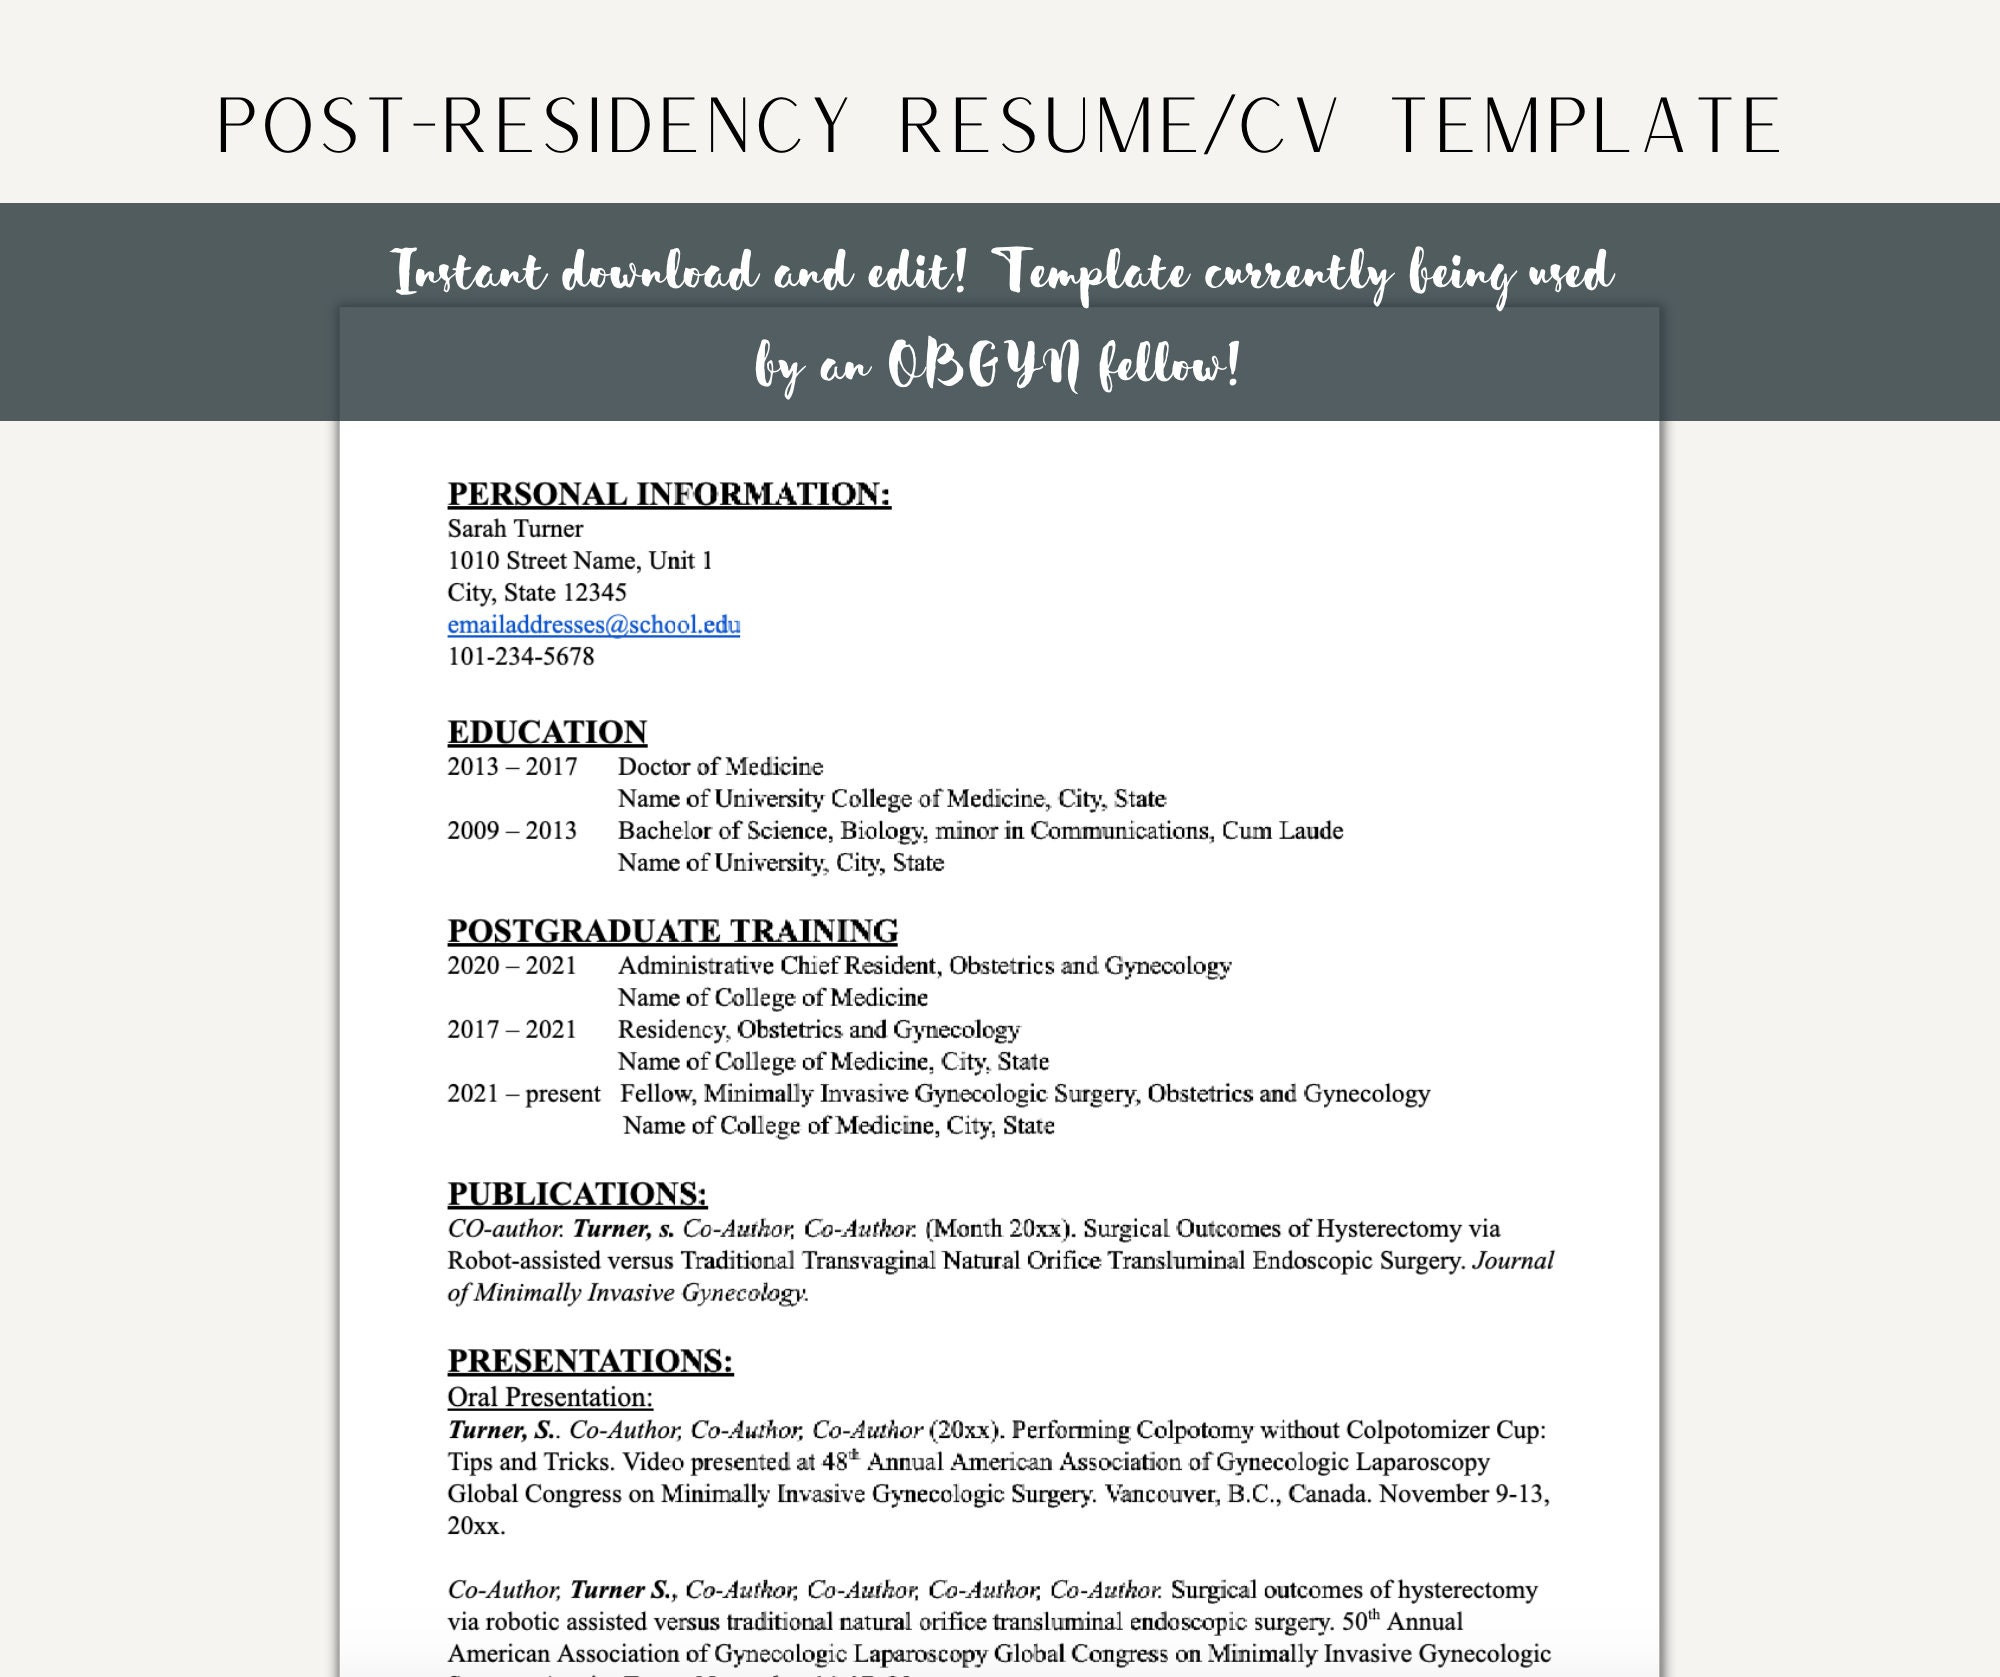 Residency Resume for Medical Student Sample Professional Cv Template Fellowship Resume Cv Template Google Doc Resume Template Resident Resume Template Word